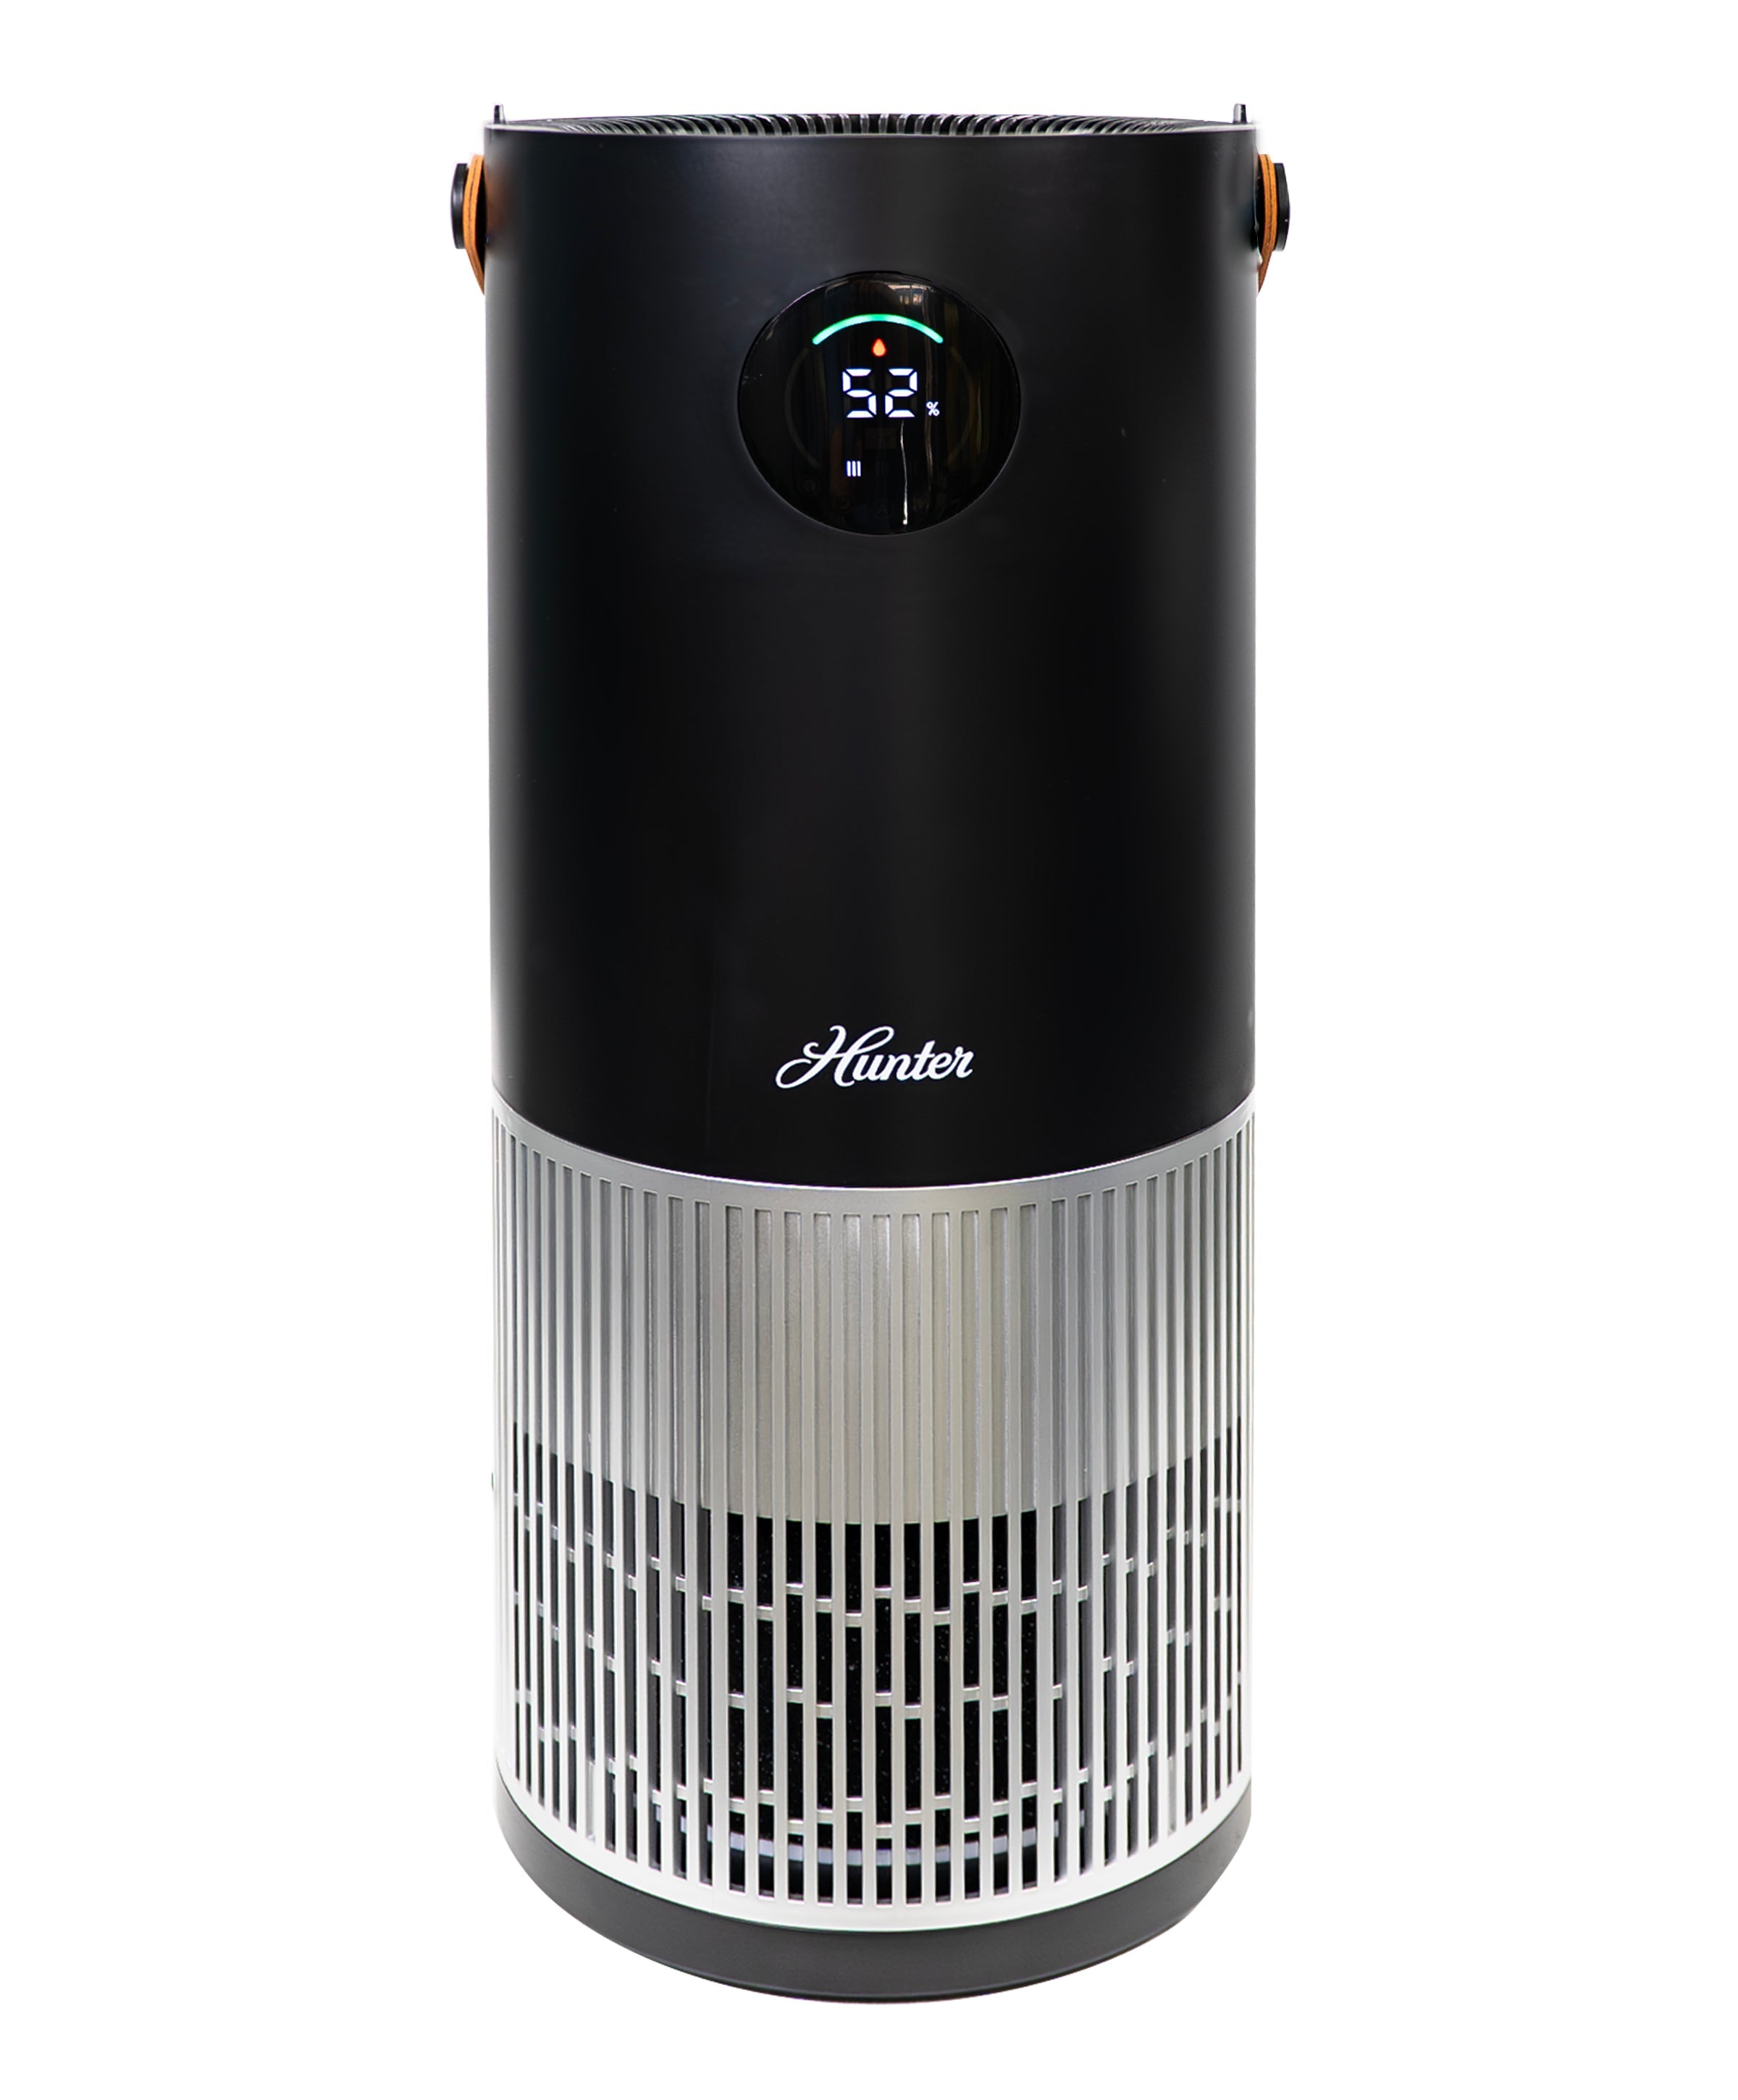 Air Purifiers, Purifying humidifier fans